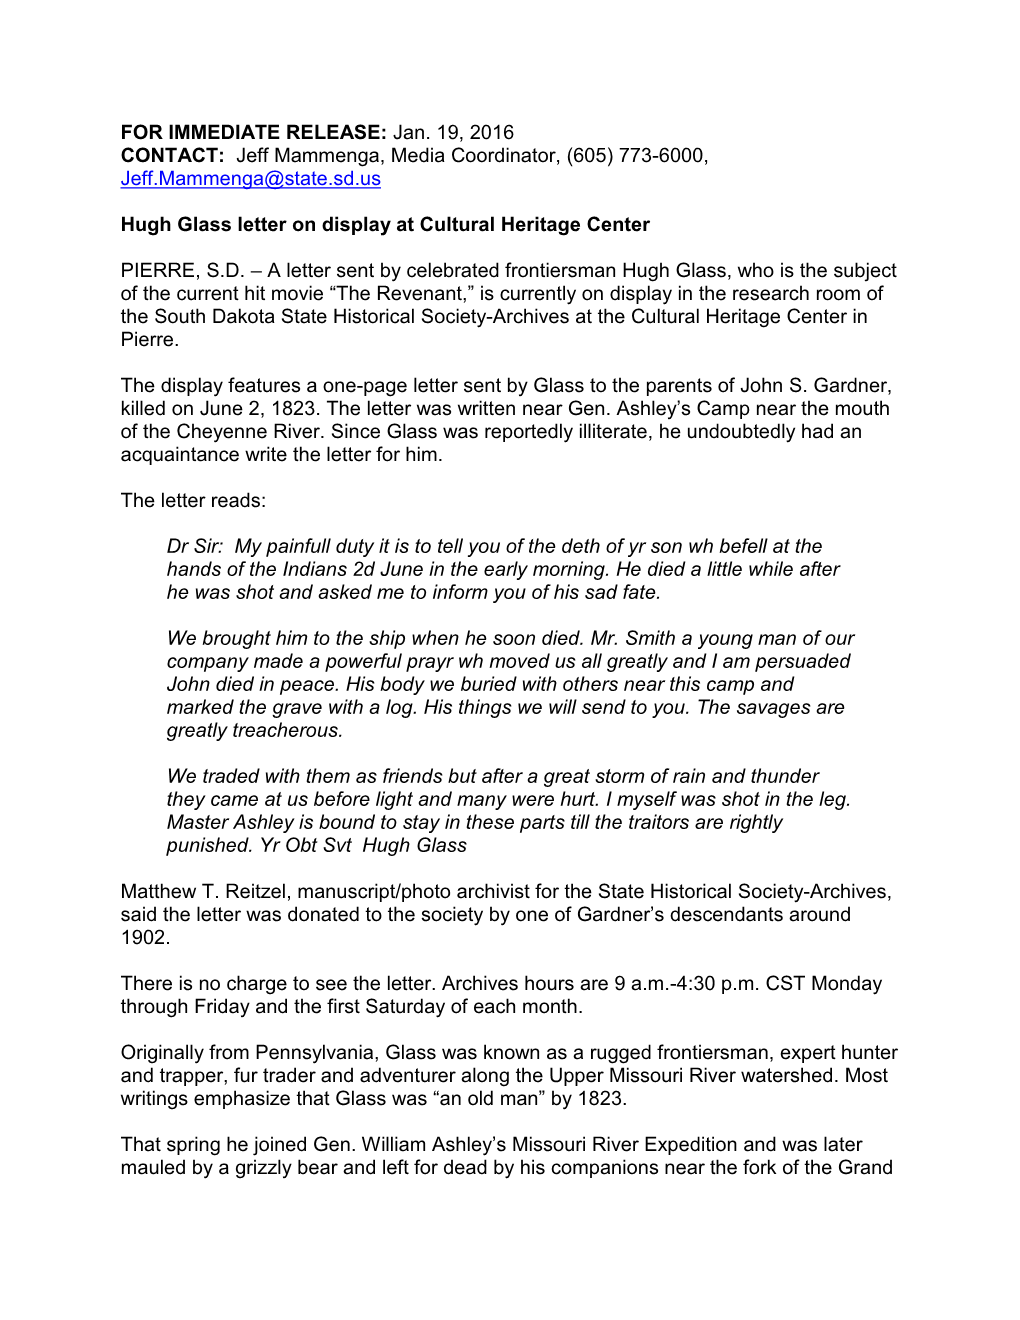 Hugh Glass Letter on Display at Cultural Heritage Center